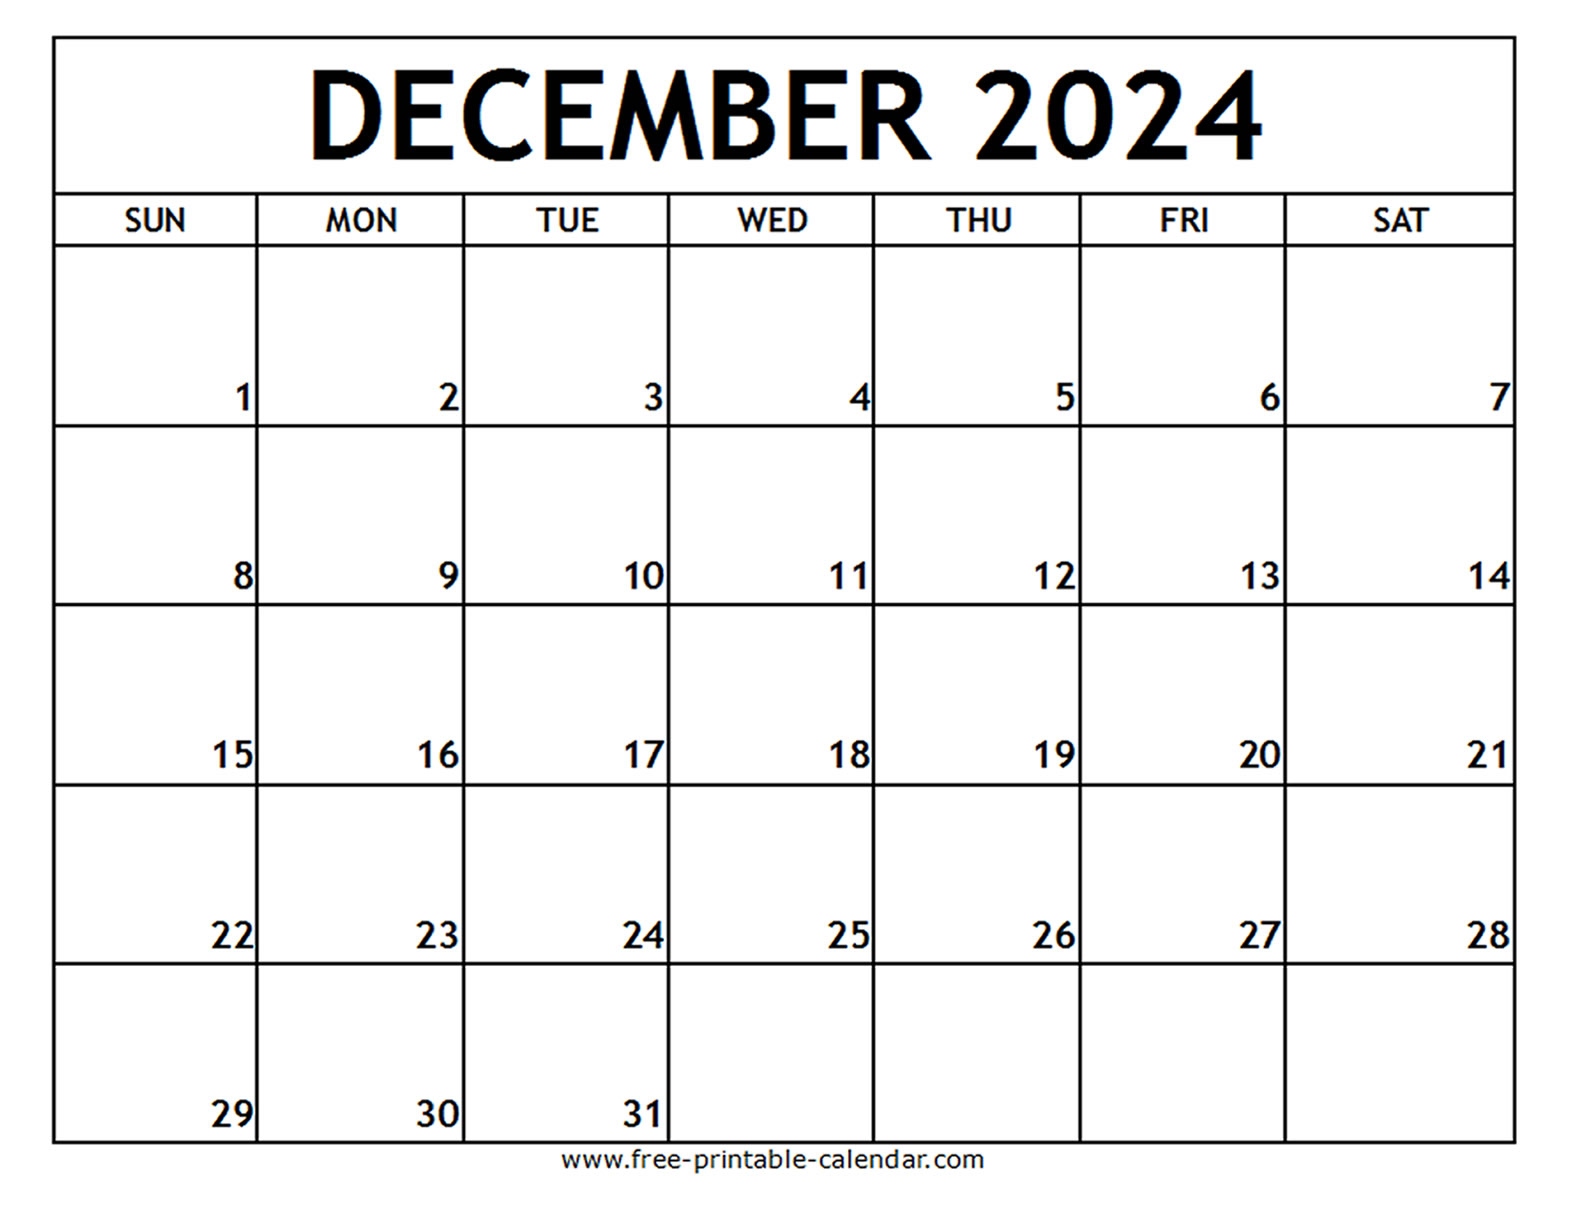 December 2024 Printable Calendar Free printable calendar - Free Printable Calendar 2024 December